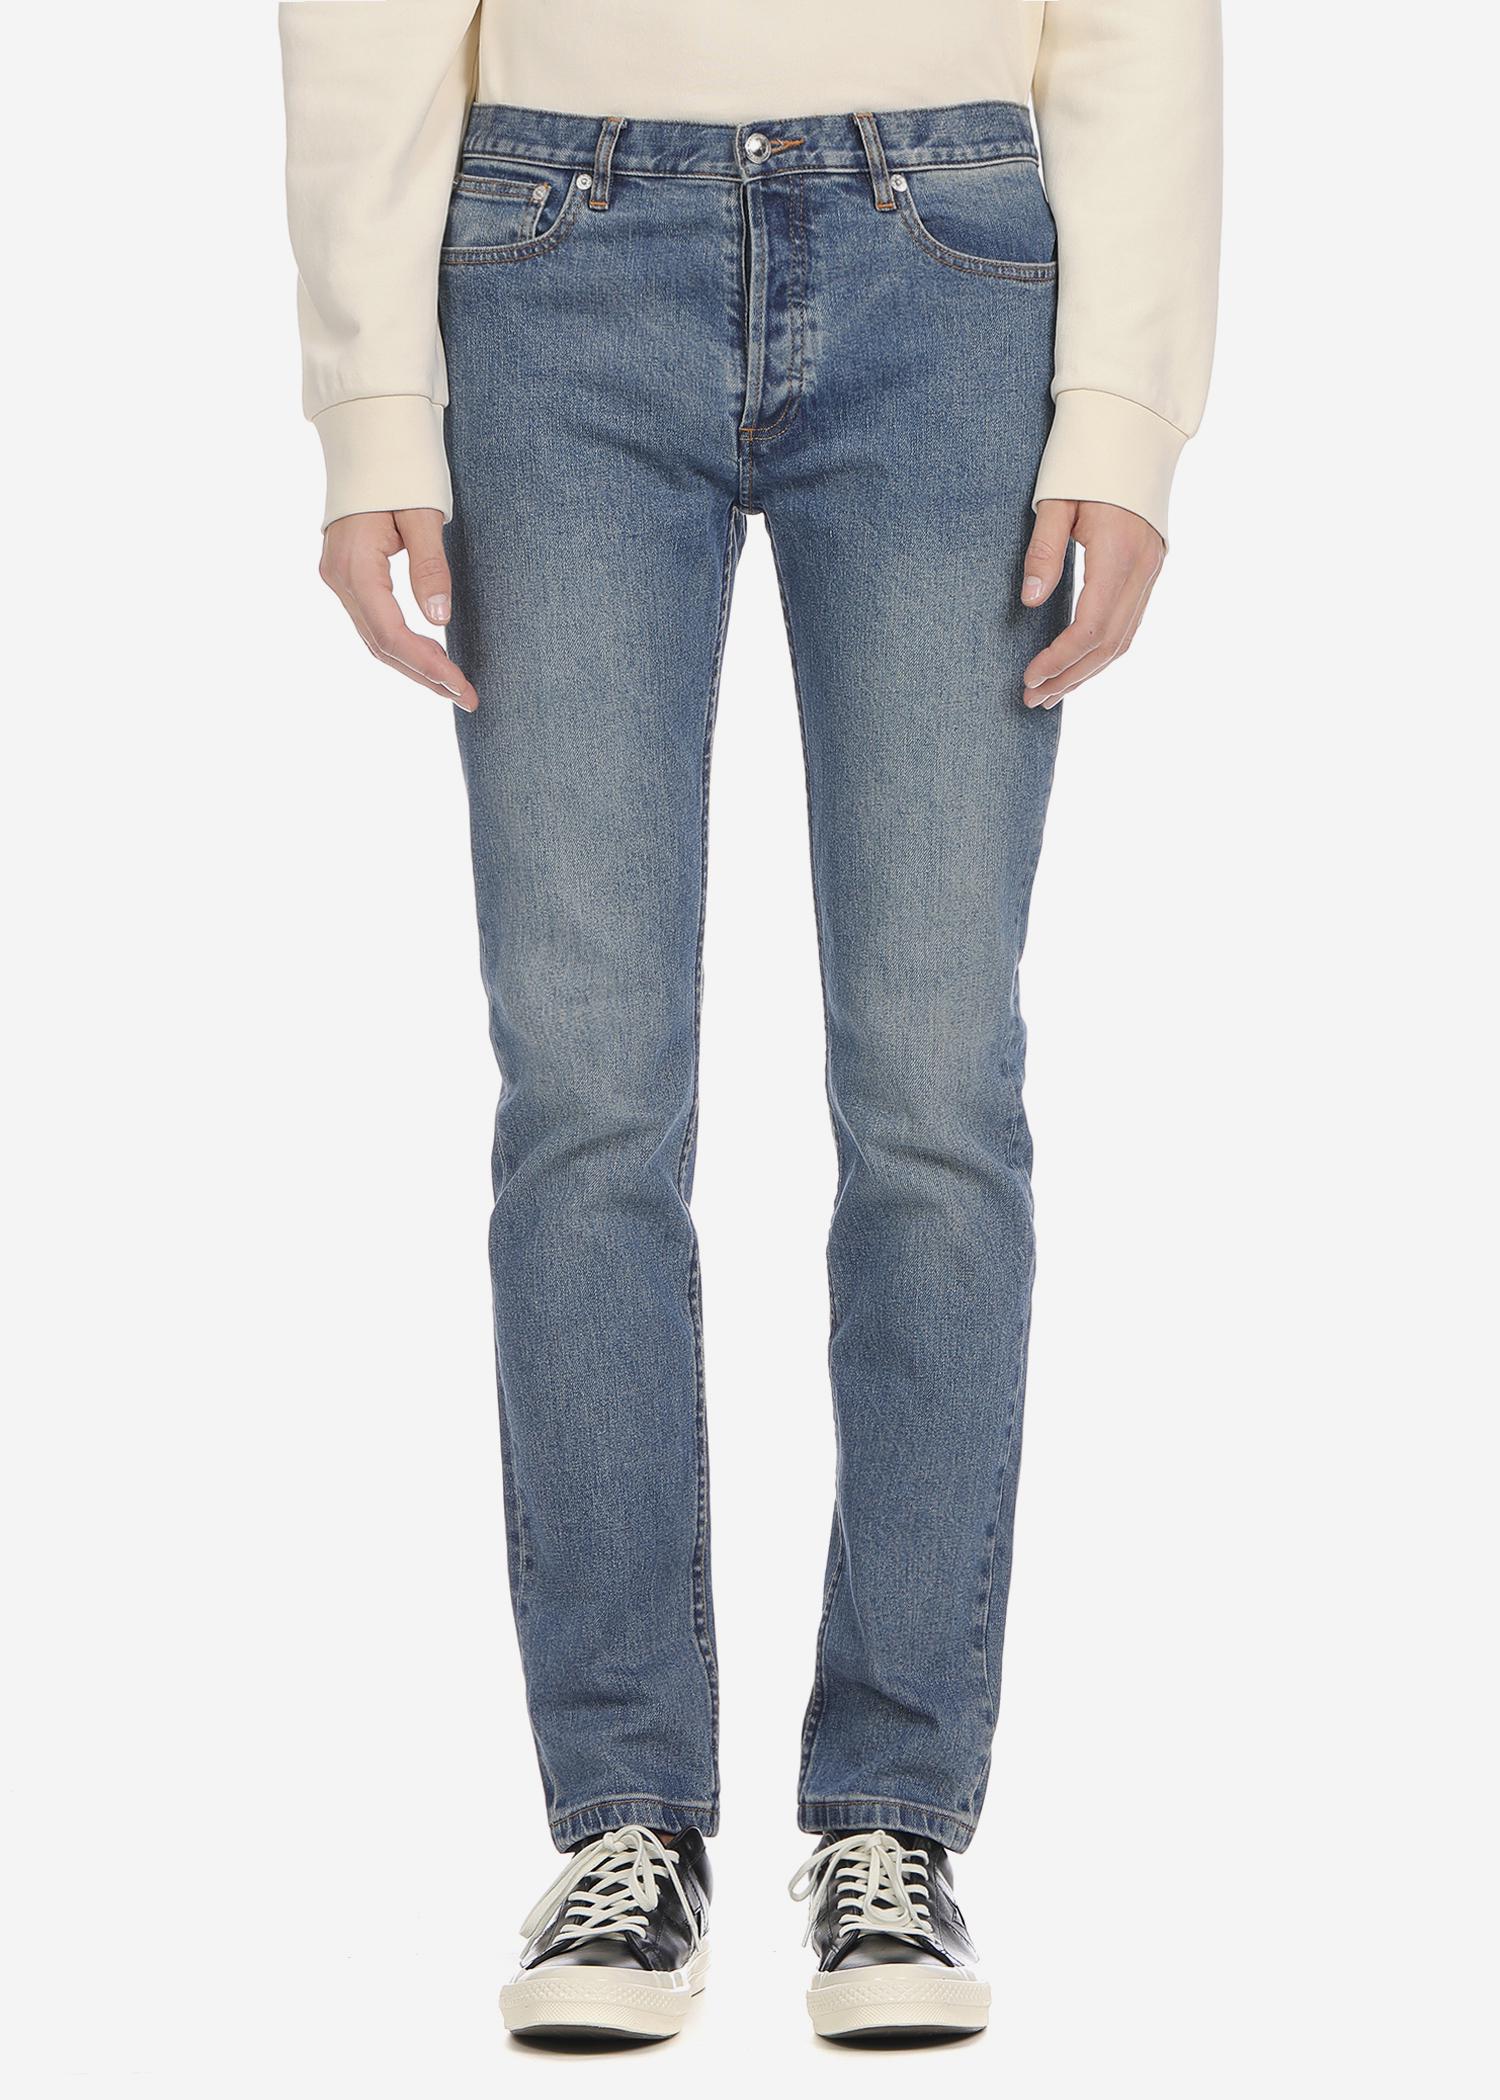 everlane skinny jeans